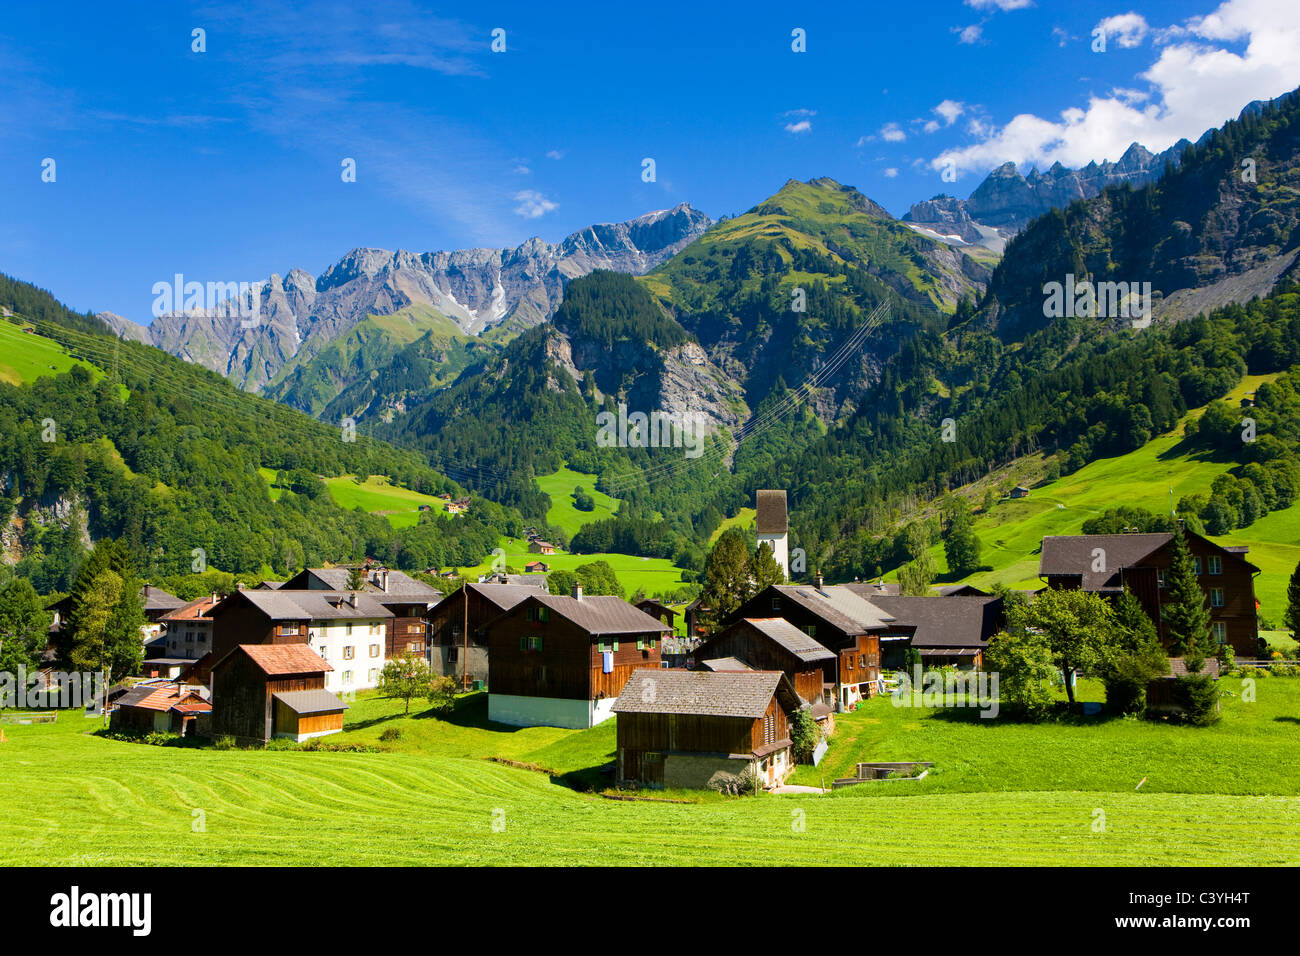 Elm, Switzerland, canton Glarus, village, houses, homes, church, mountains Stock Photo